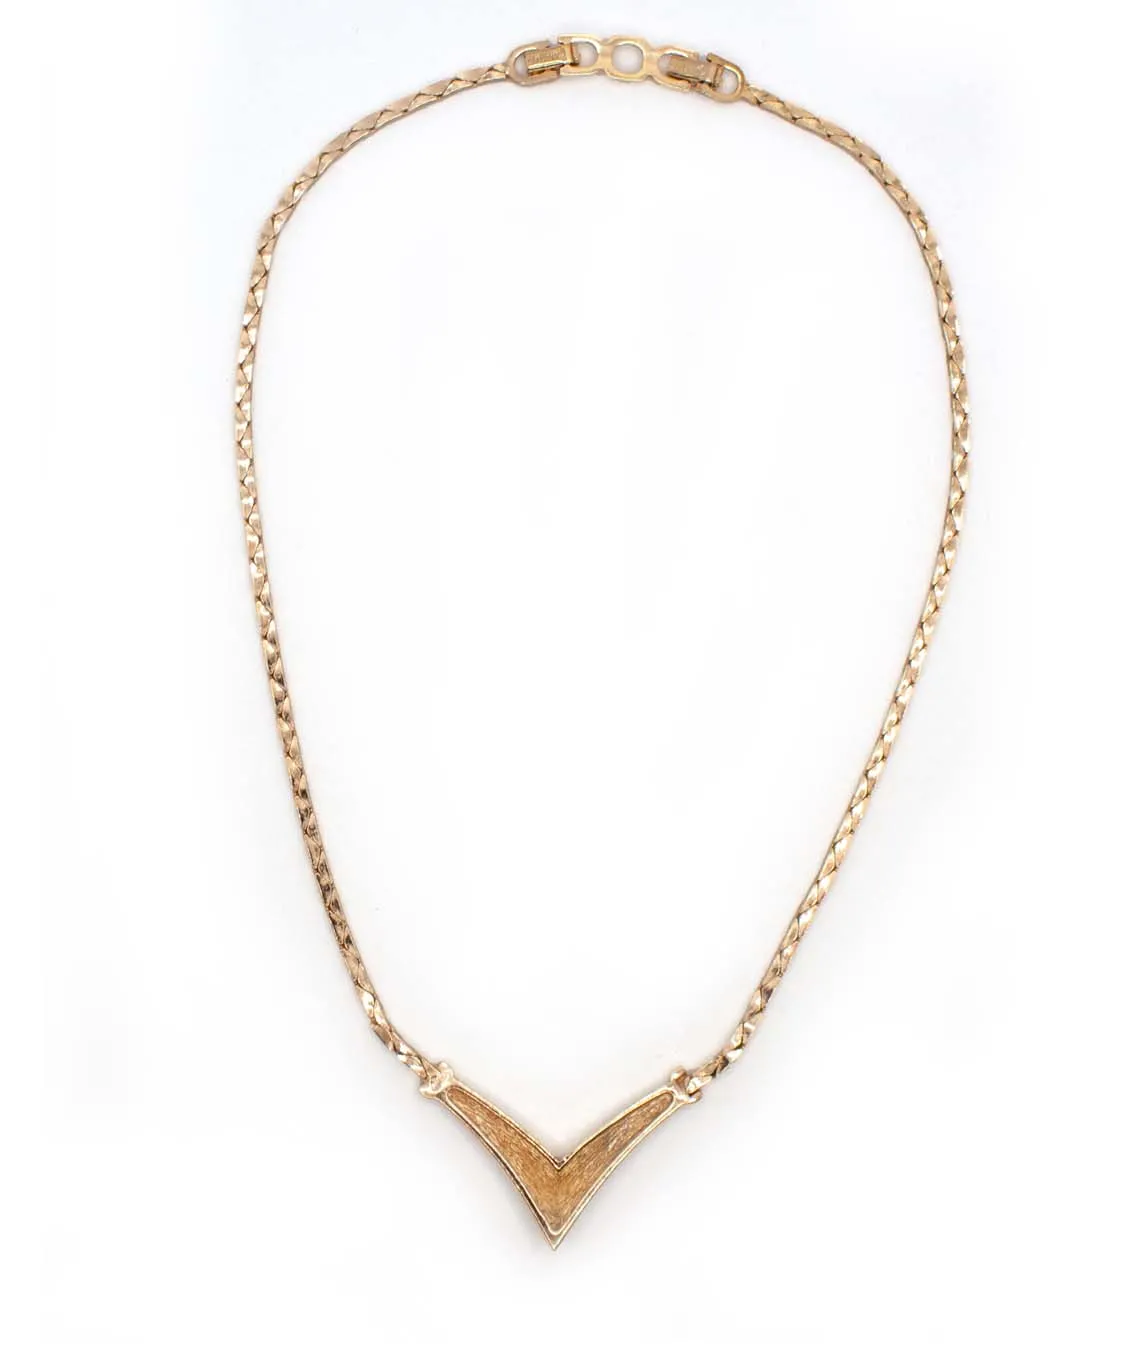 Vintage 1980s Christian Dior gold-tone chain with rhinestone v decoration